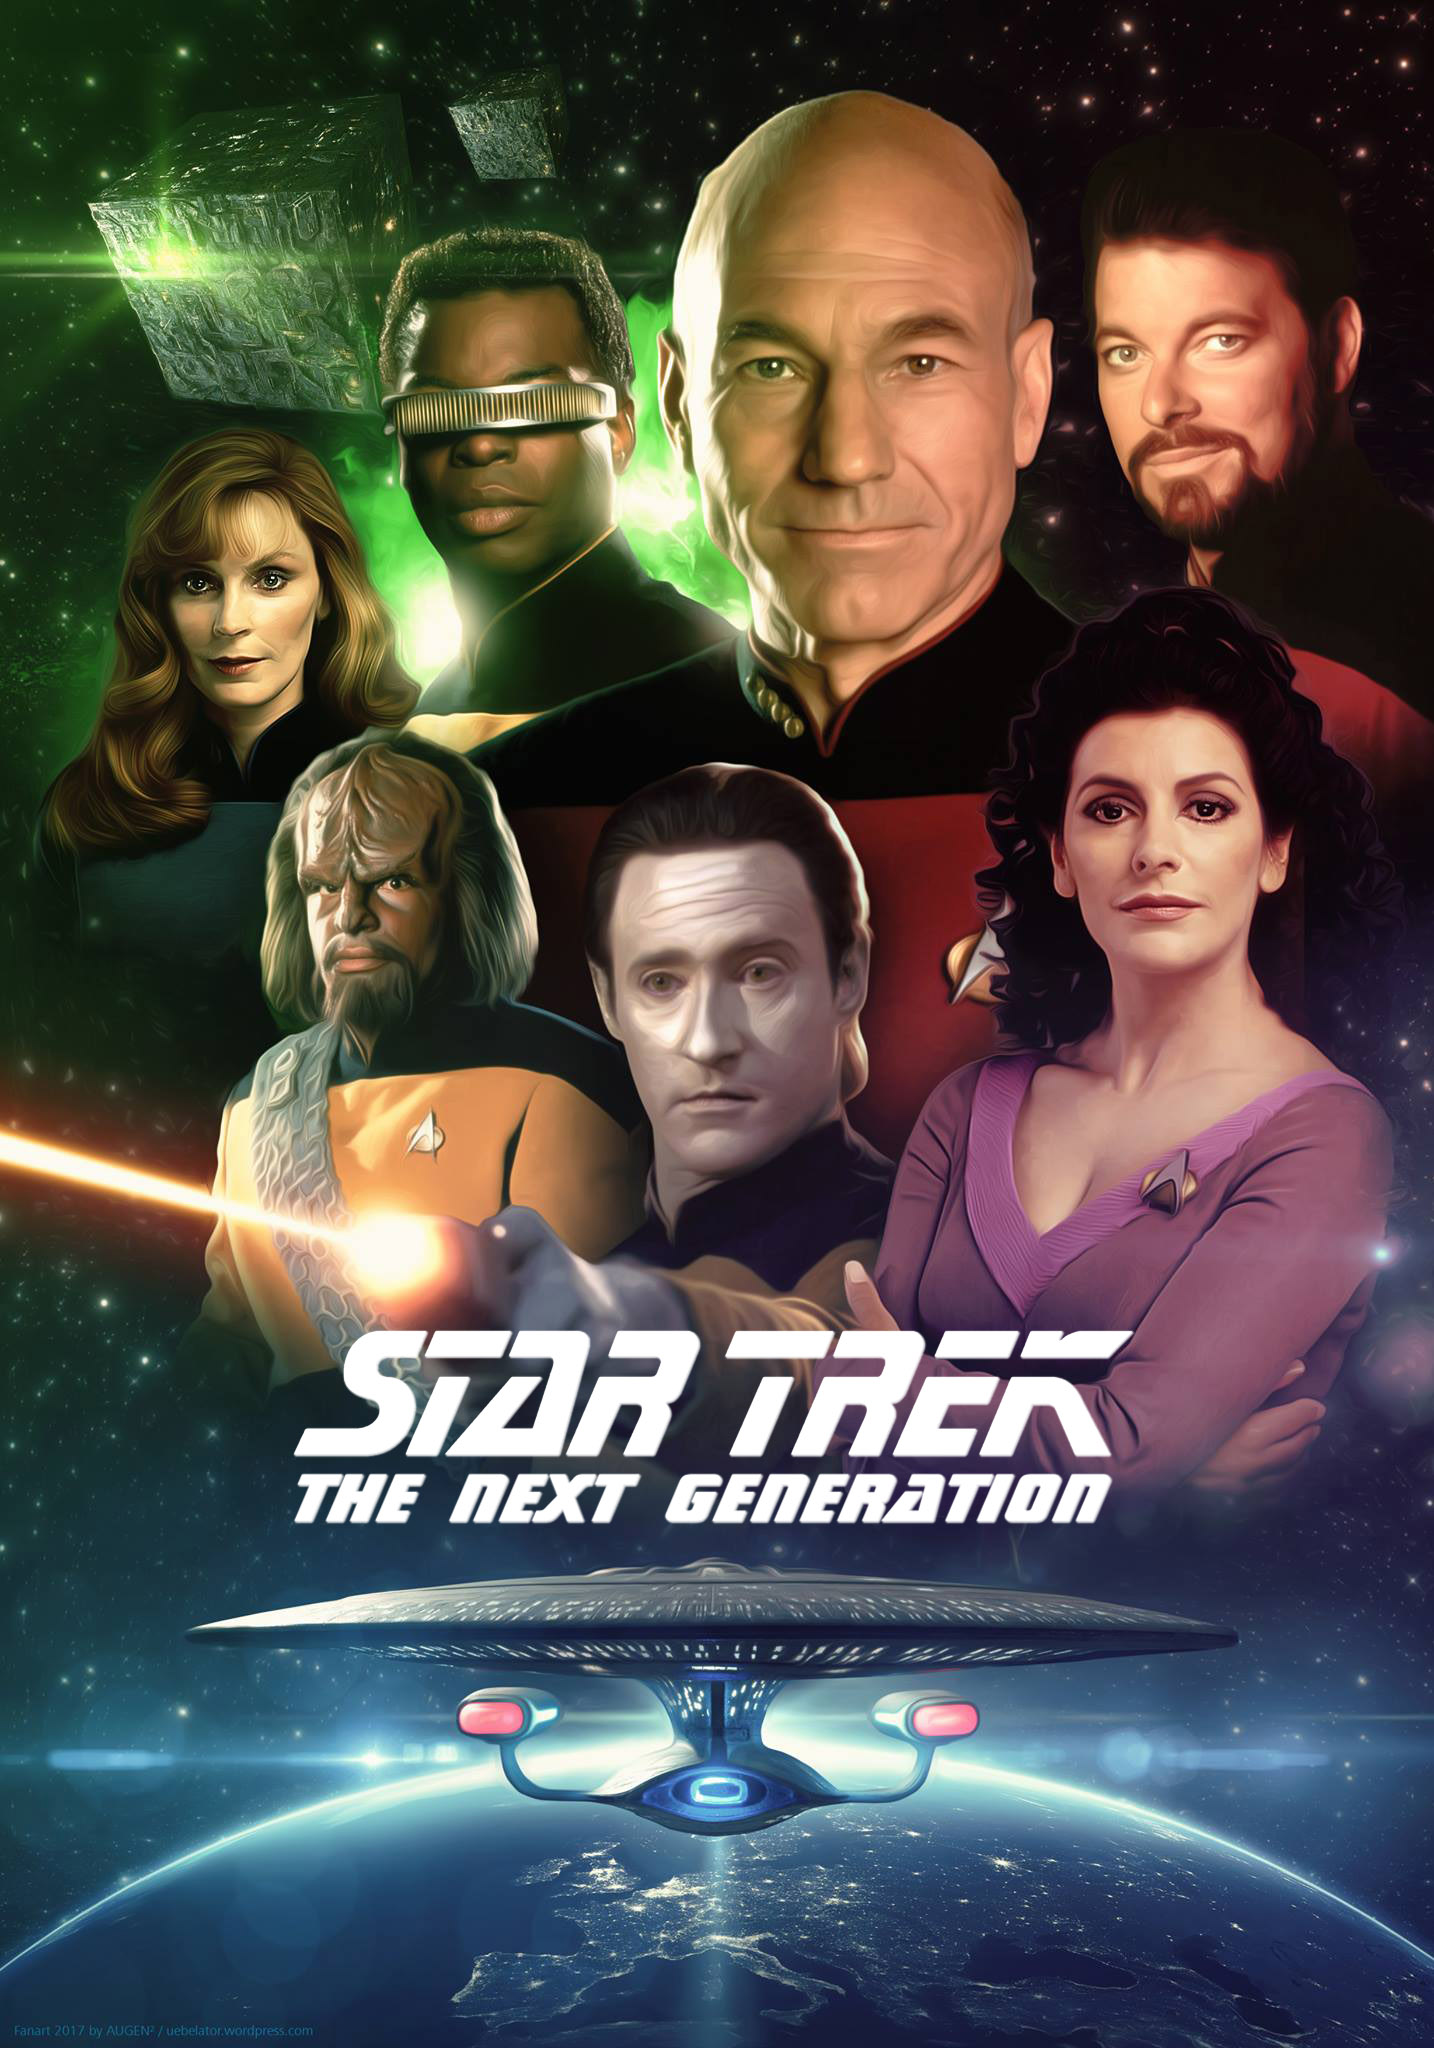 Star Trek: TNG (The next generation)